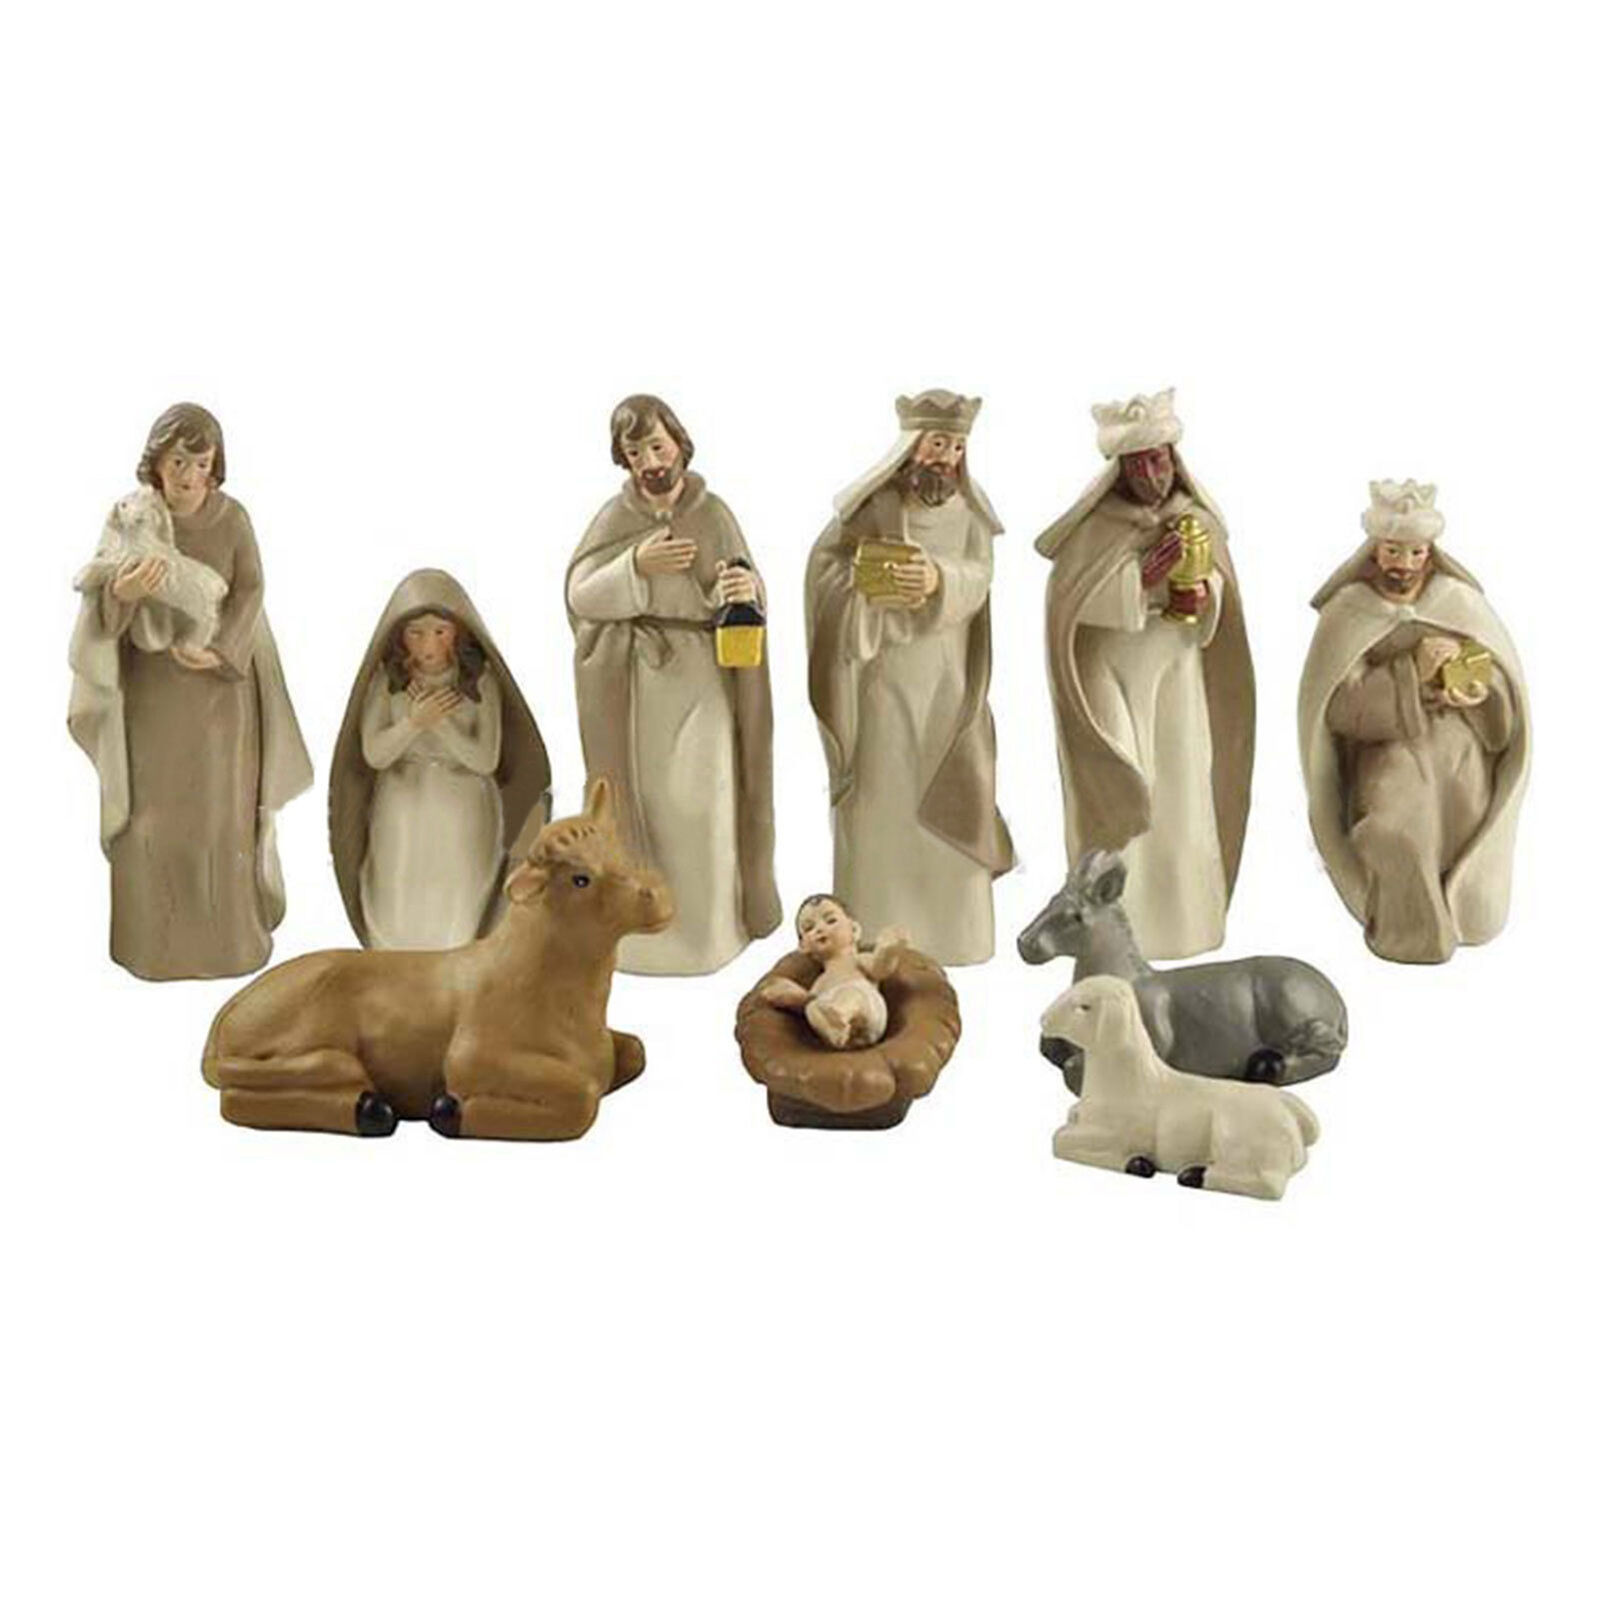 Christ Birth of Jesus Ornament Set Nativity Scene Figurines Set Christmas Statue